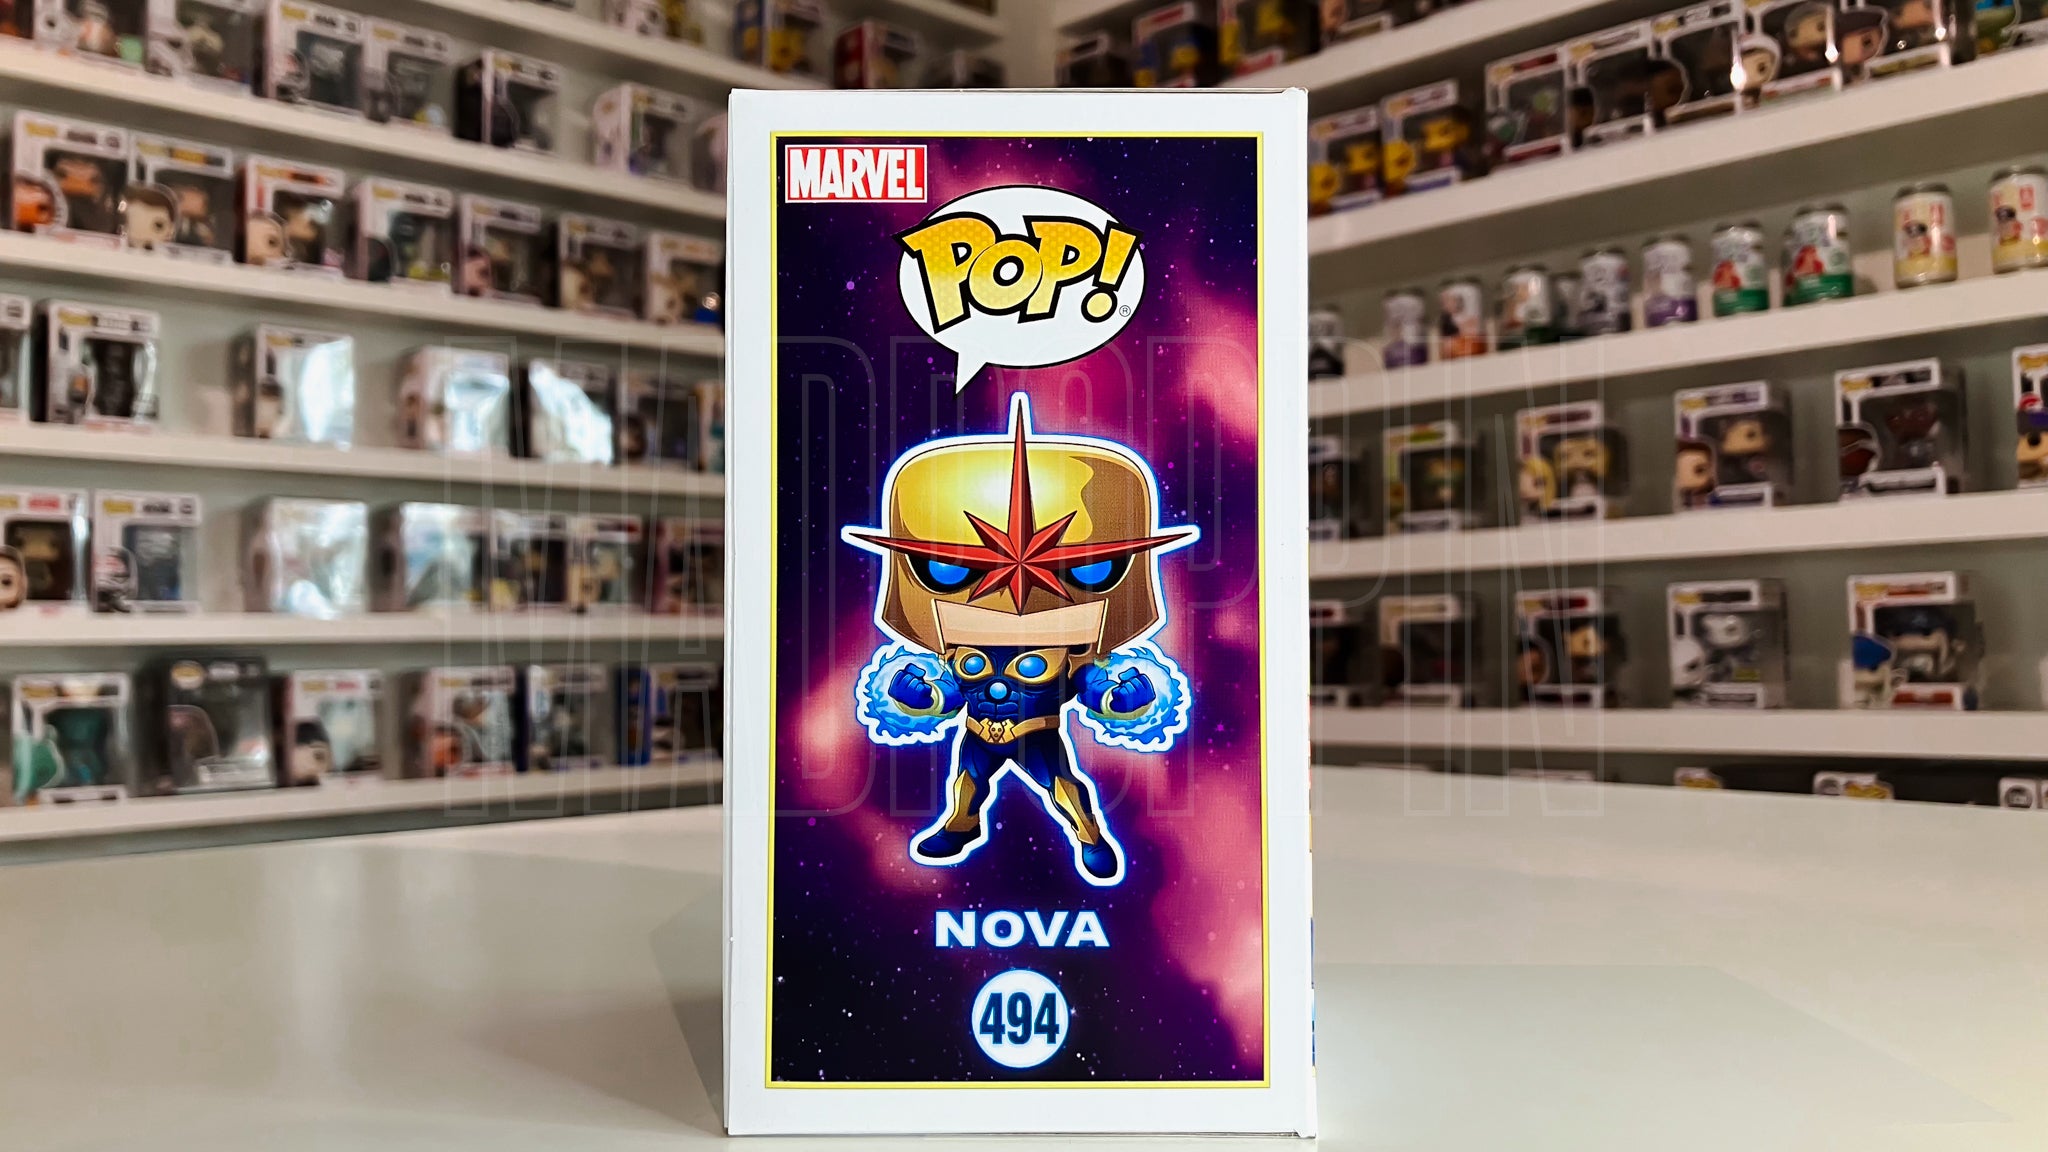 Funko Pop Marvel Nova PX Previews Exclusive Limited Edition 494